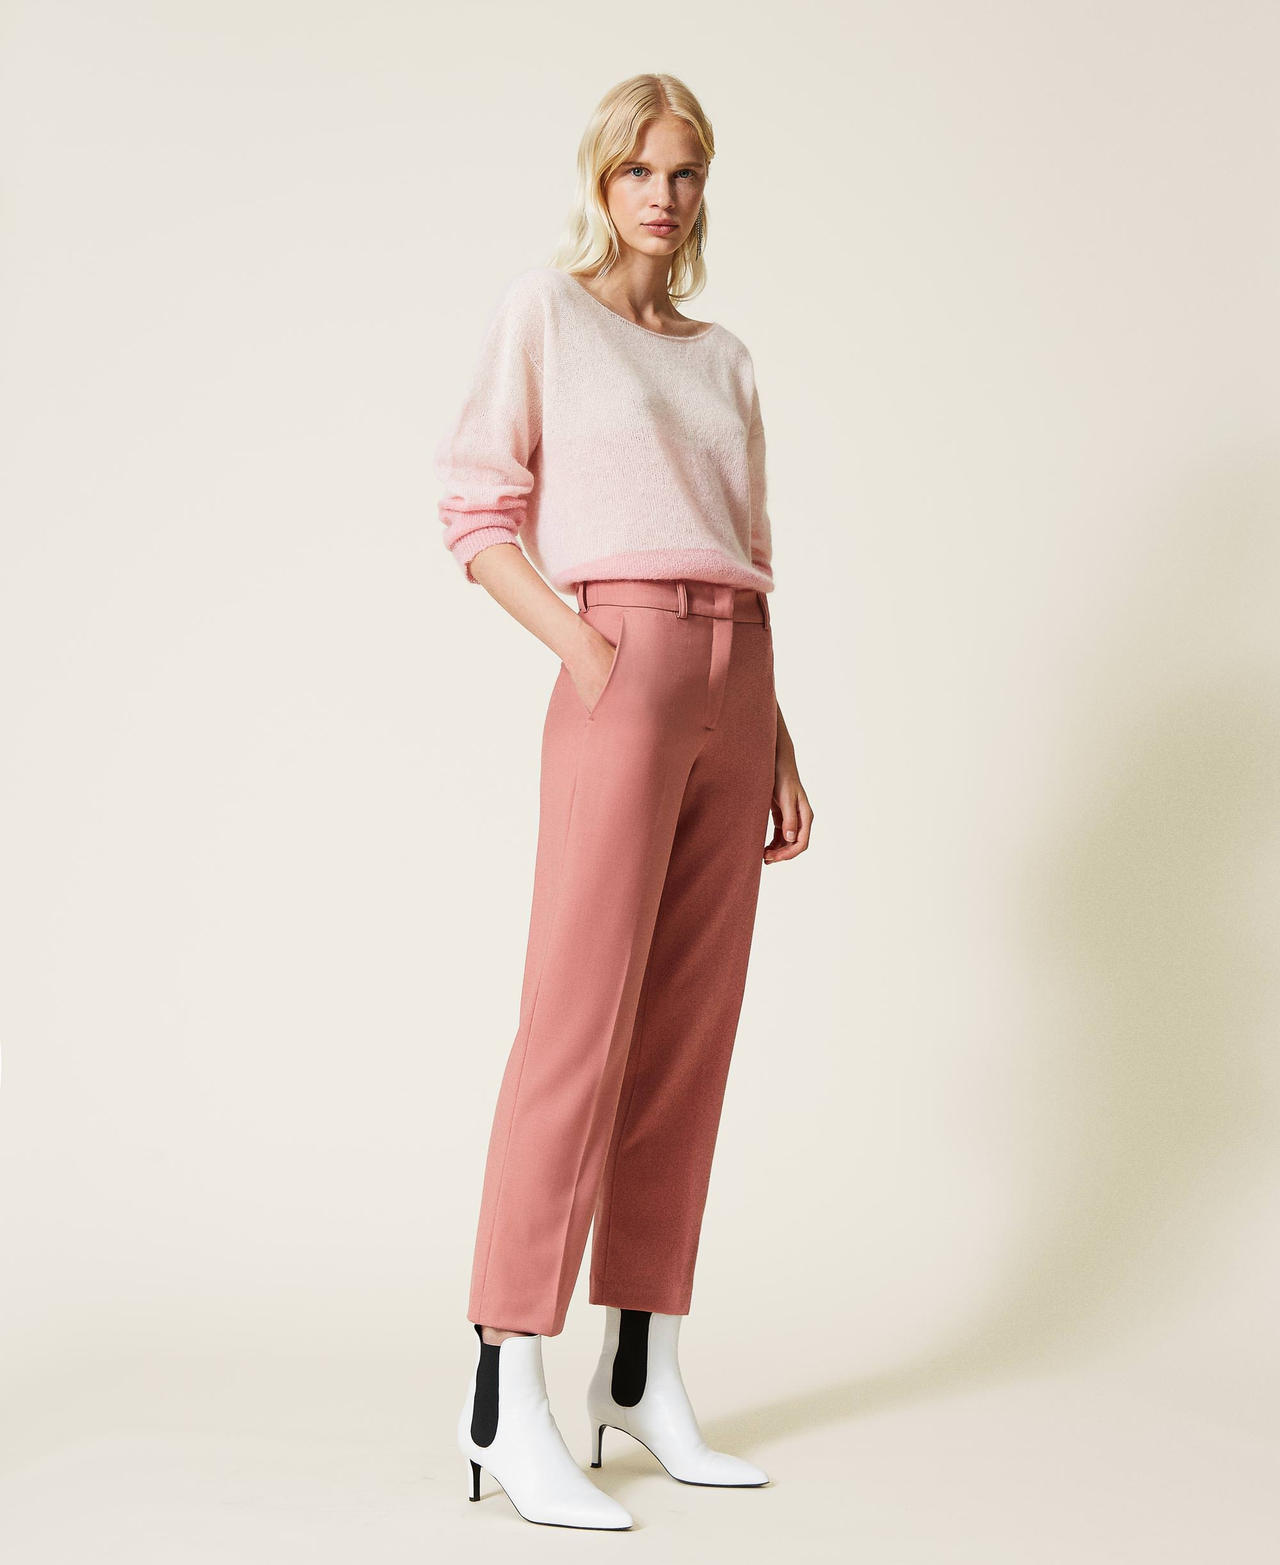 Wool trousers Canyon Pink Woman 212TP2491-02